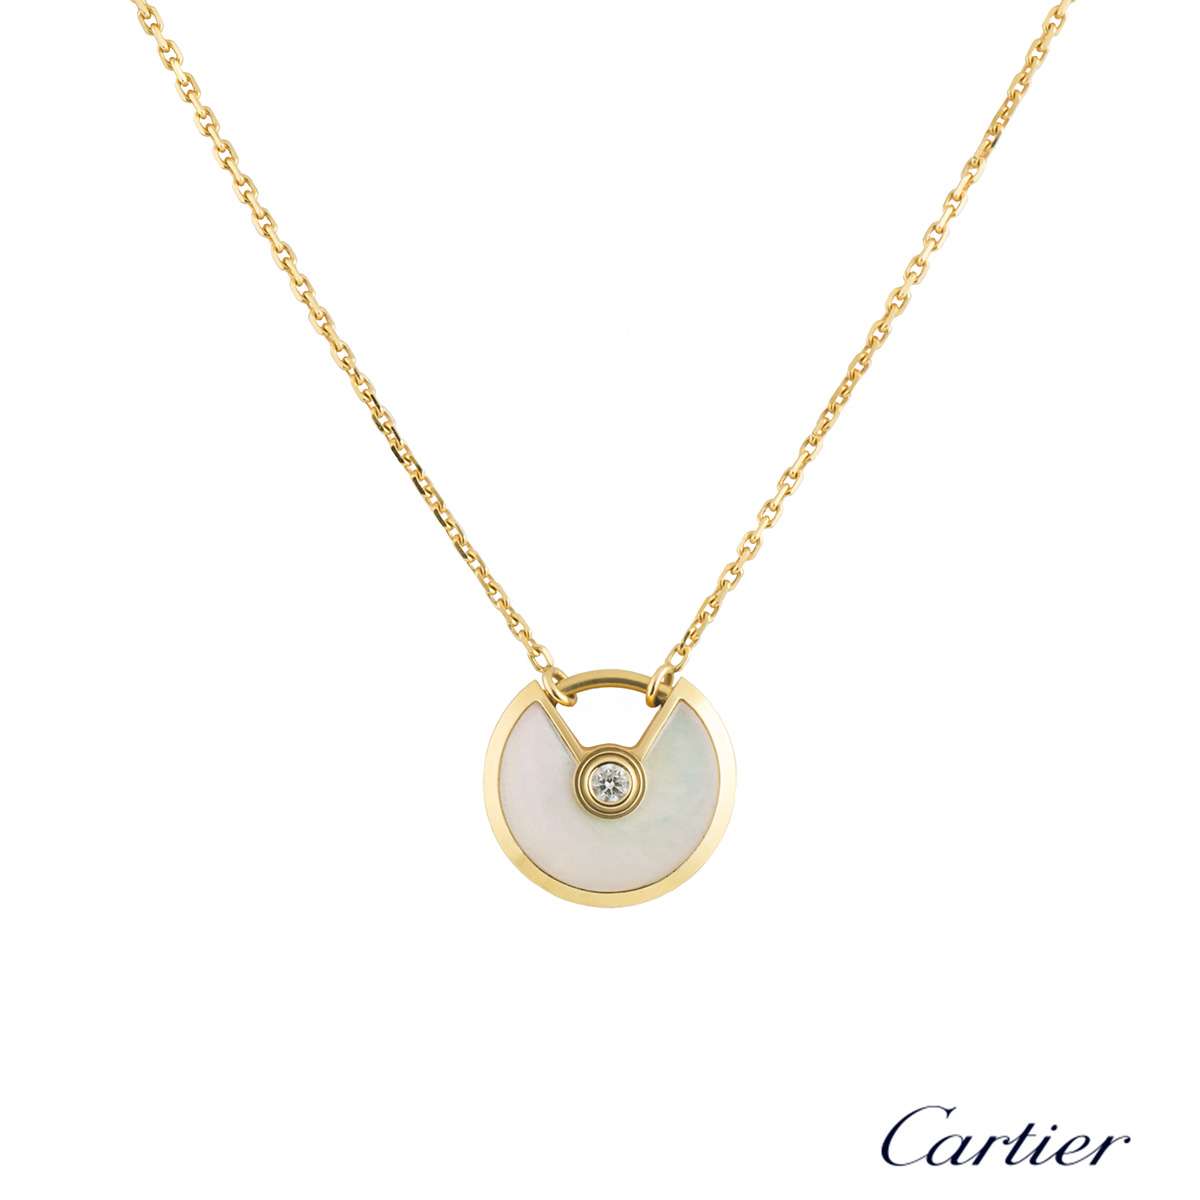 cartier necklace amulette price